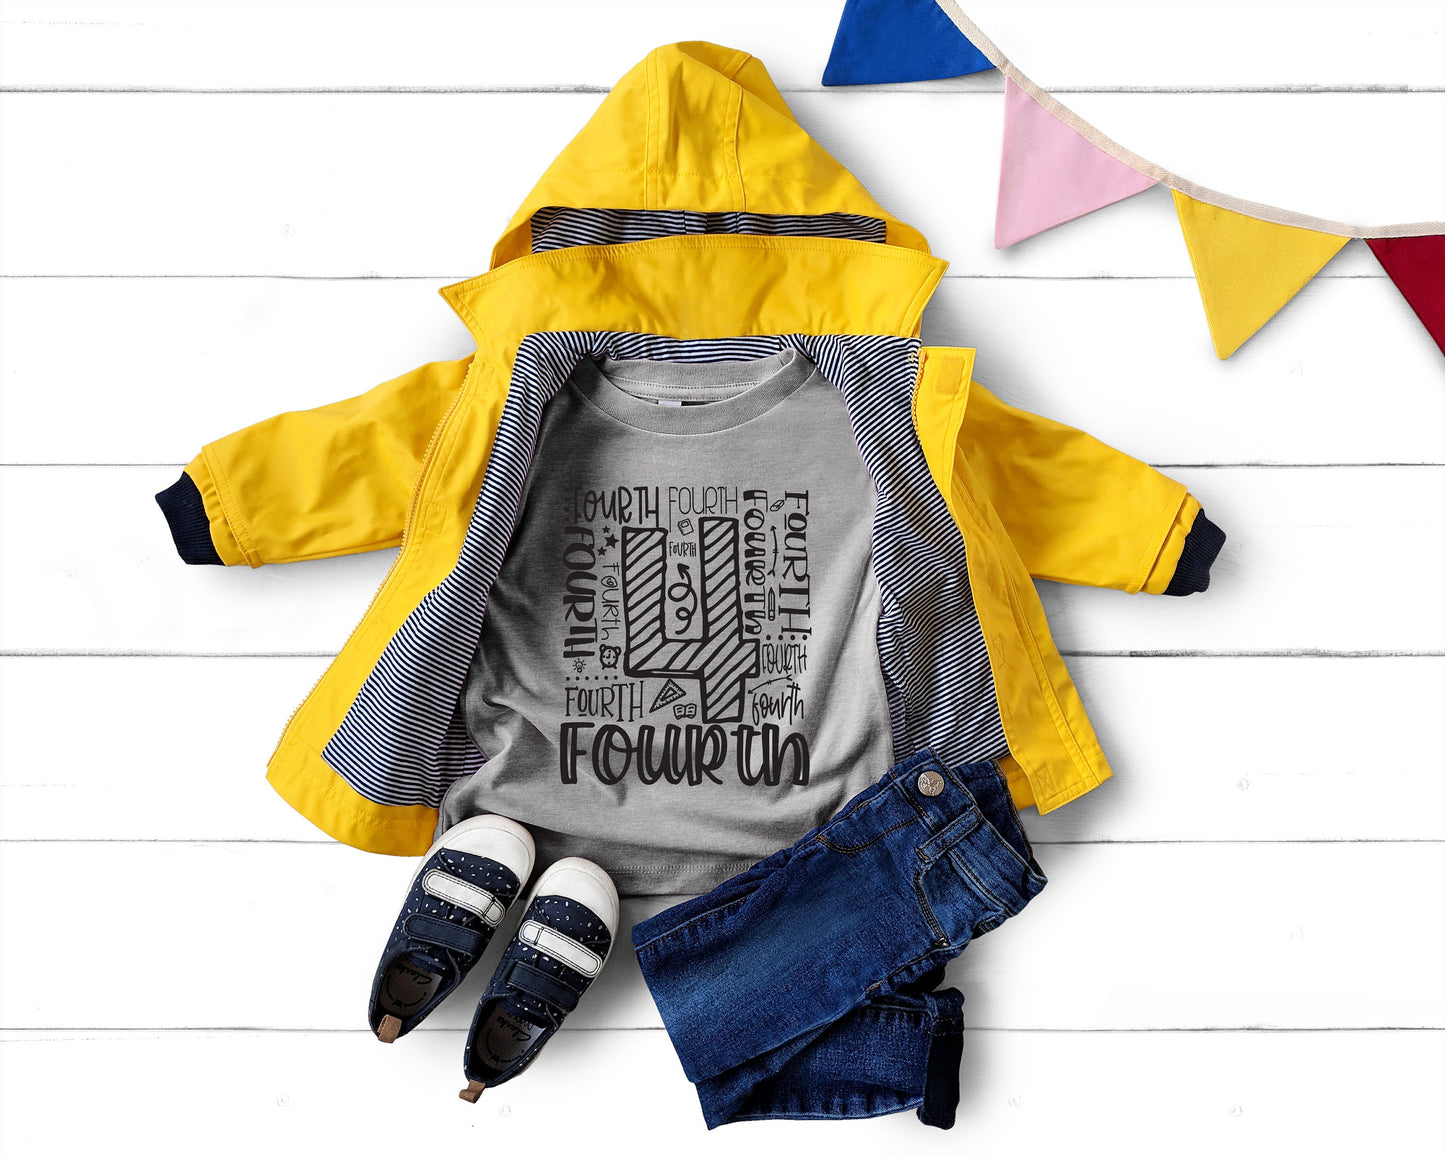 Fifth Grade Shirt- Back to School Shirt for Kids - Stick'em Up Baby®